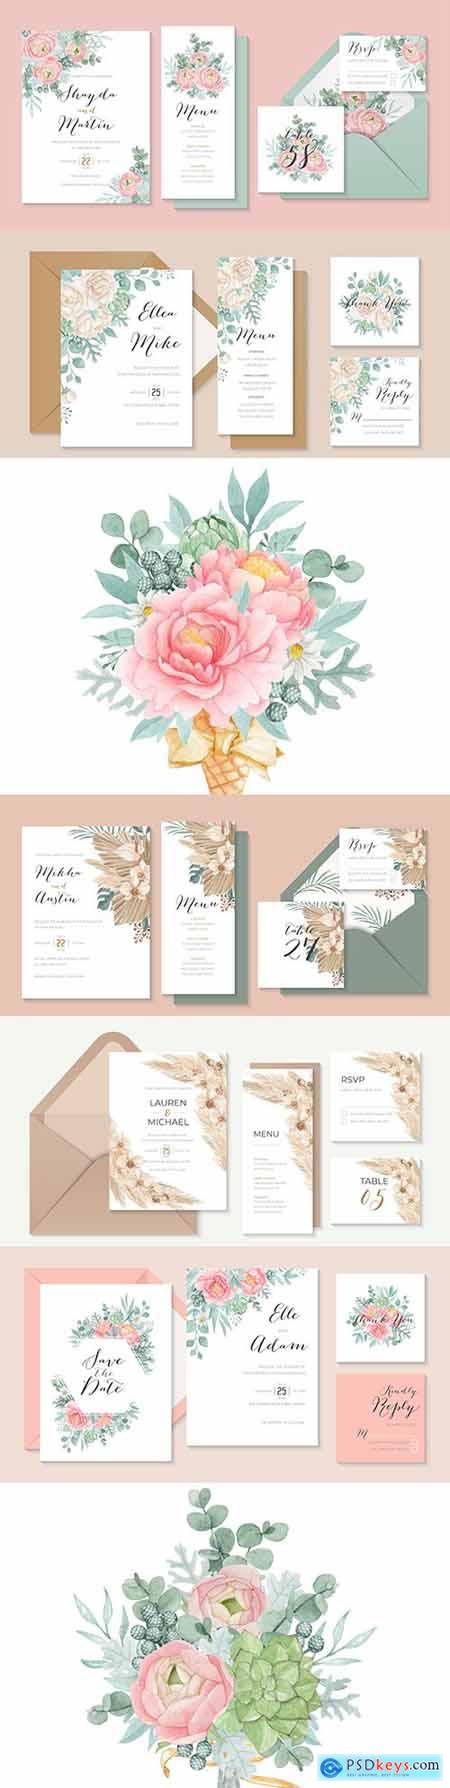 Romantic wedding invitation and watercolor flower bouquet